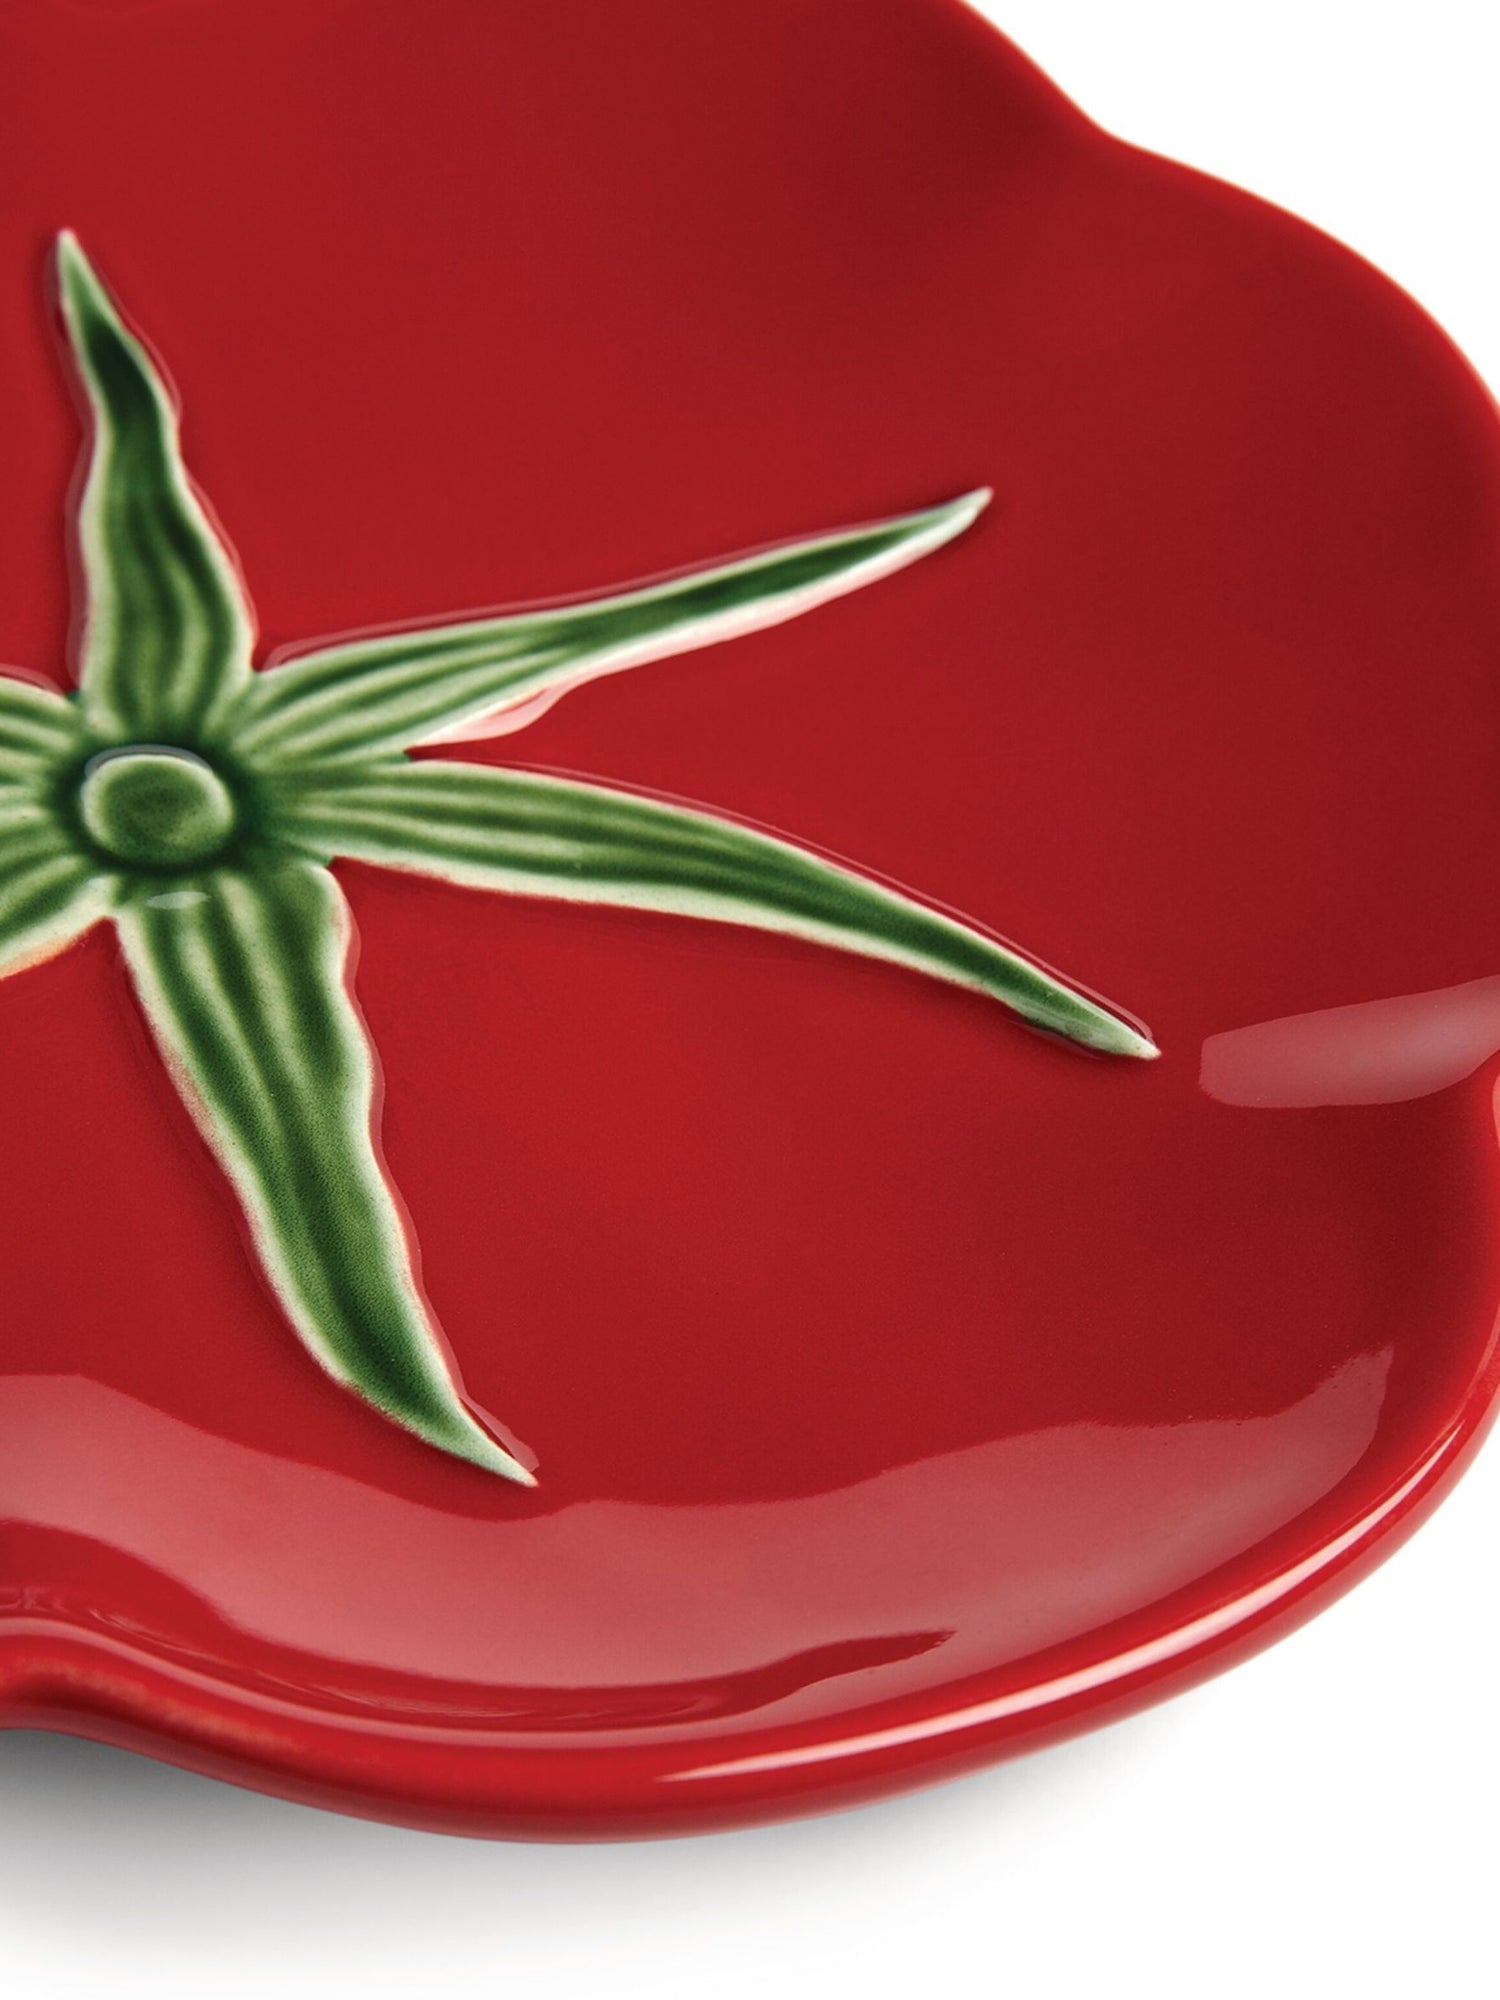 Bordallo Pinheiro: Tomato Dessert Plate (21cm), red